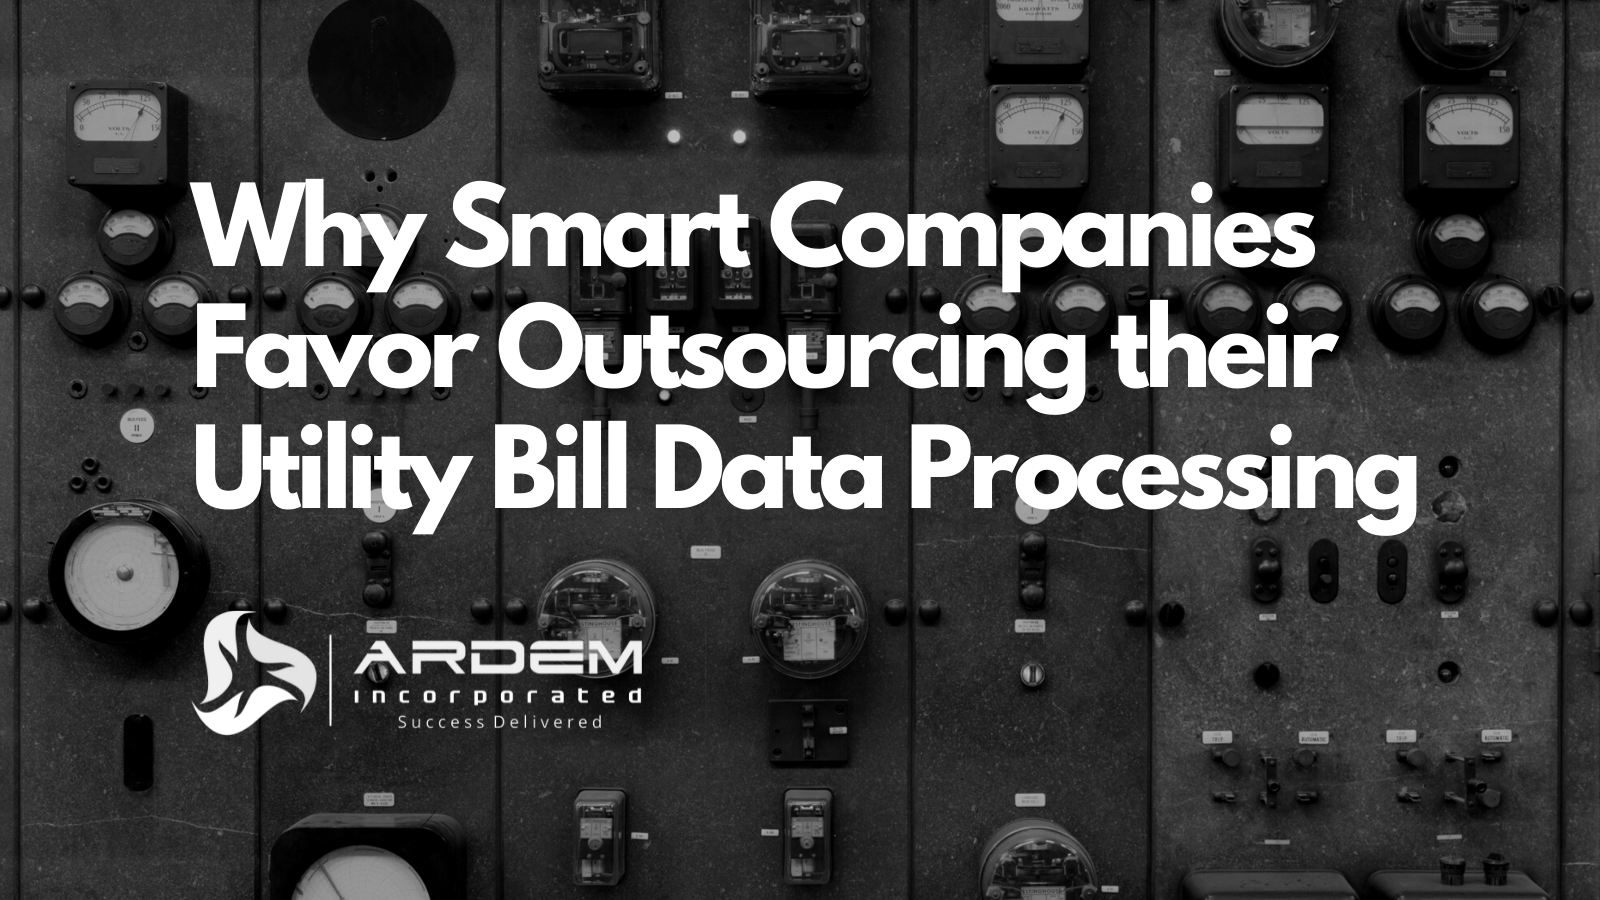 Utility Bill Data Processing data entry